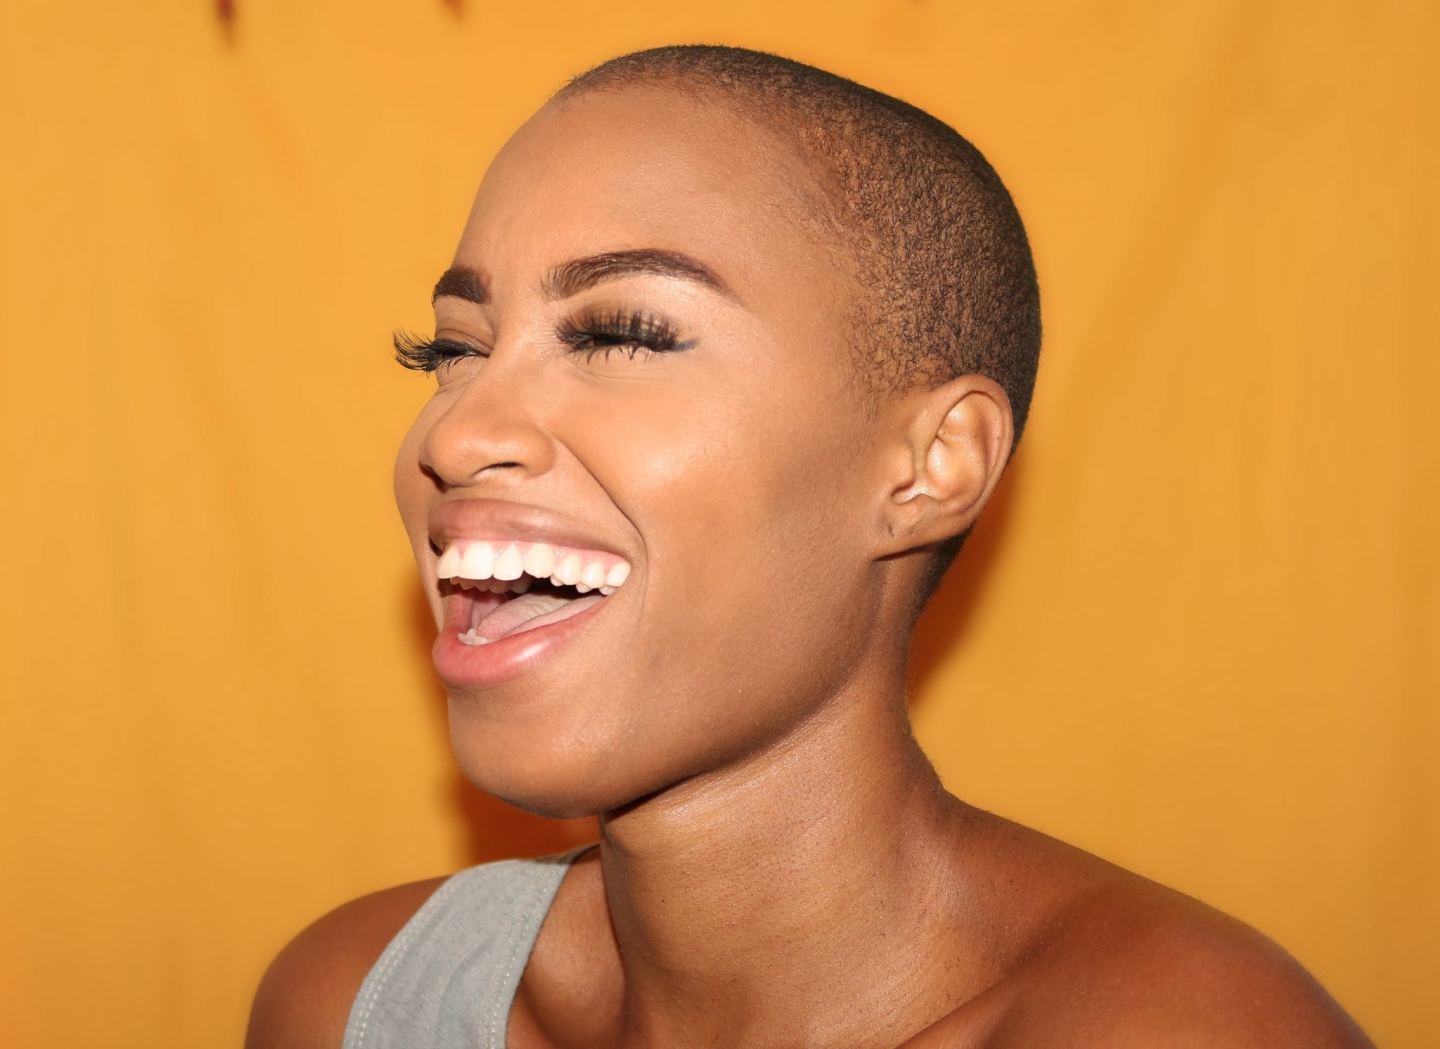 woman shaved head long eyelashes yellow background smile